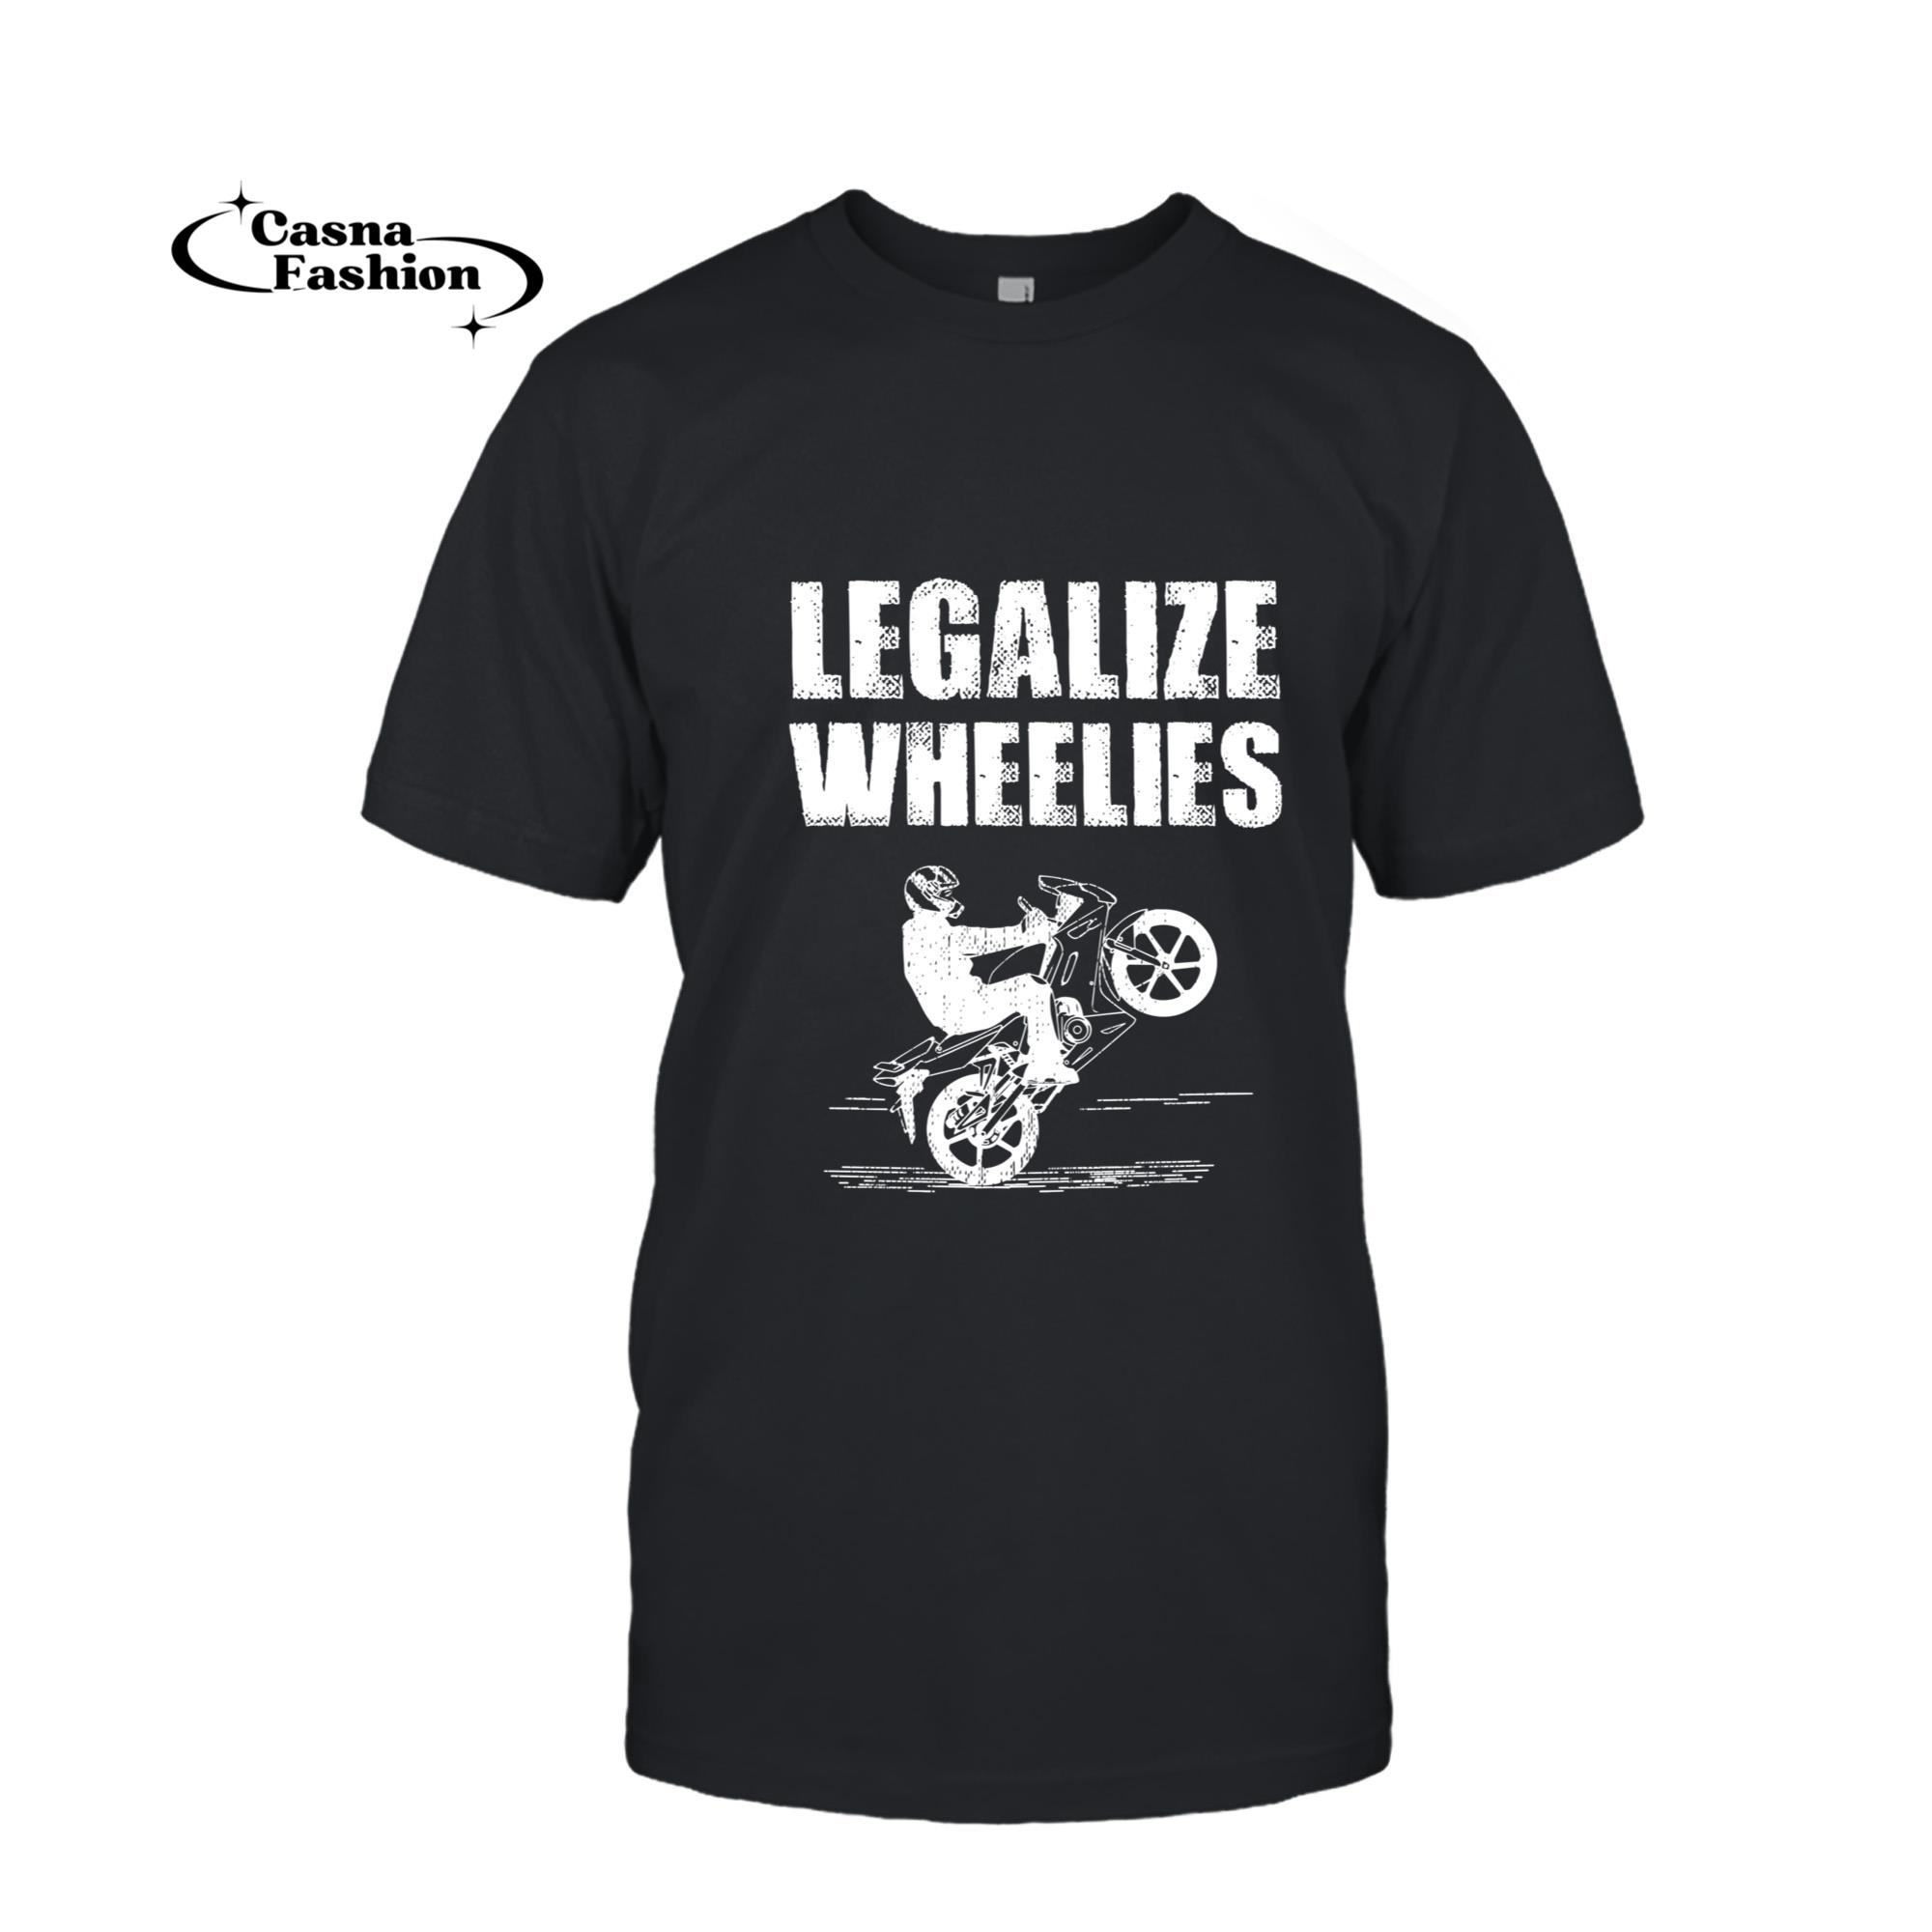 casnafashion_T-shirt_Funny Motorcycle Biker Design - Legalize Wheelies Pullover Hoodie_T-shirt_Black